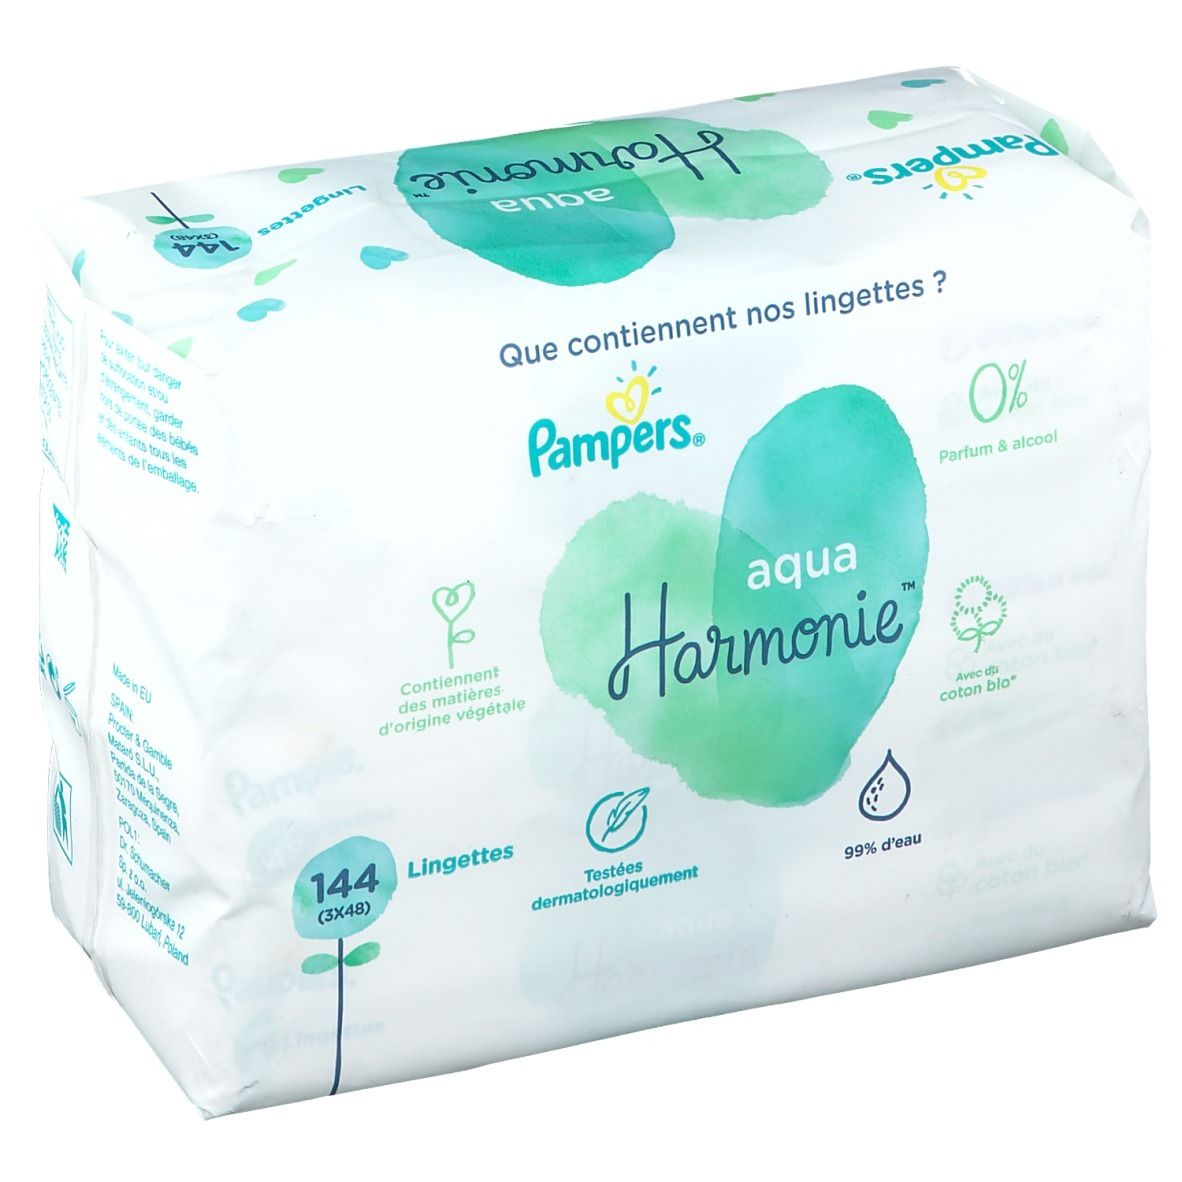 Pampers Aqua Harmonie™ Lingettes 2x48 pc(s) - Redcare Pharmacie